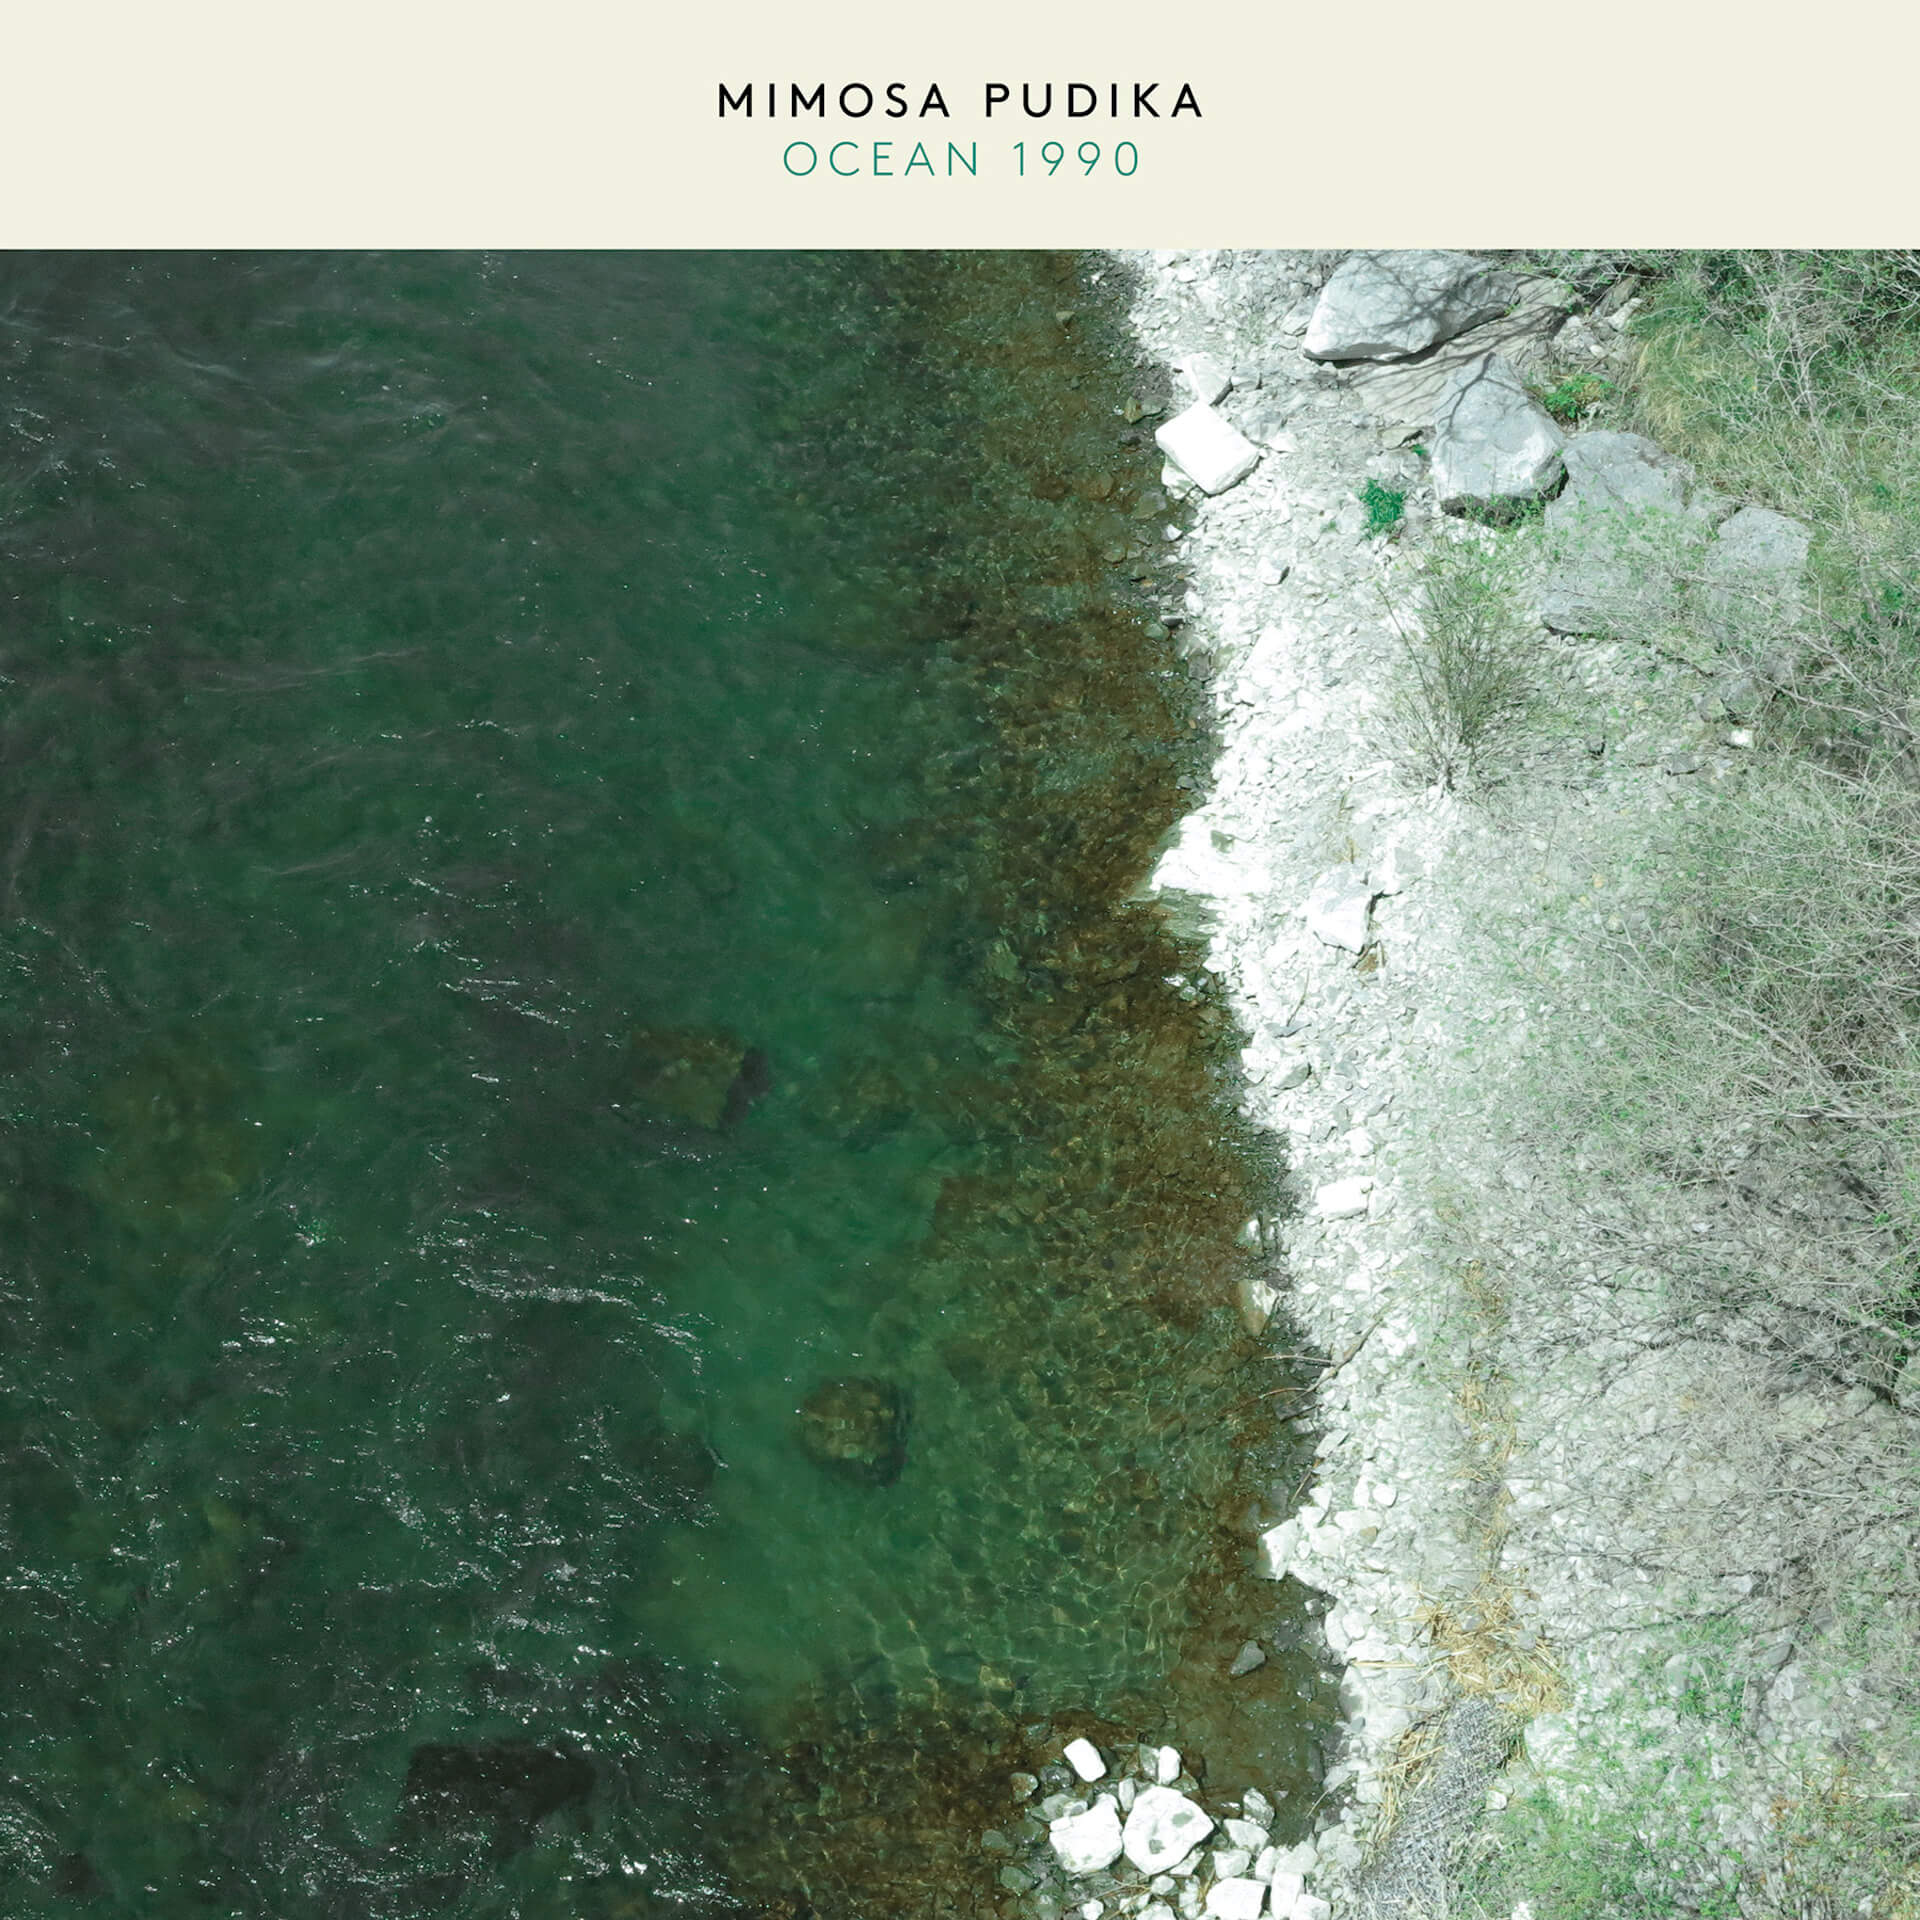 Free Babyronia、Mimosa Pudika名義でアルバム『Mimosa Pudika』をリリース｜アルバムよりシングル「Ocean 1990」先行配信 music221014-mimosa-pudika2